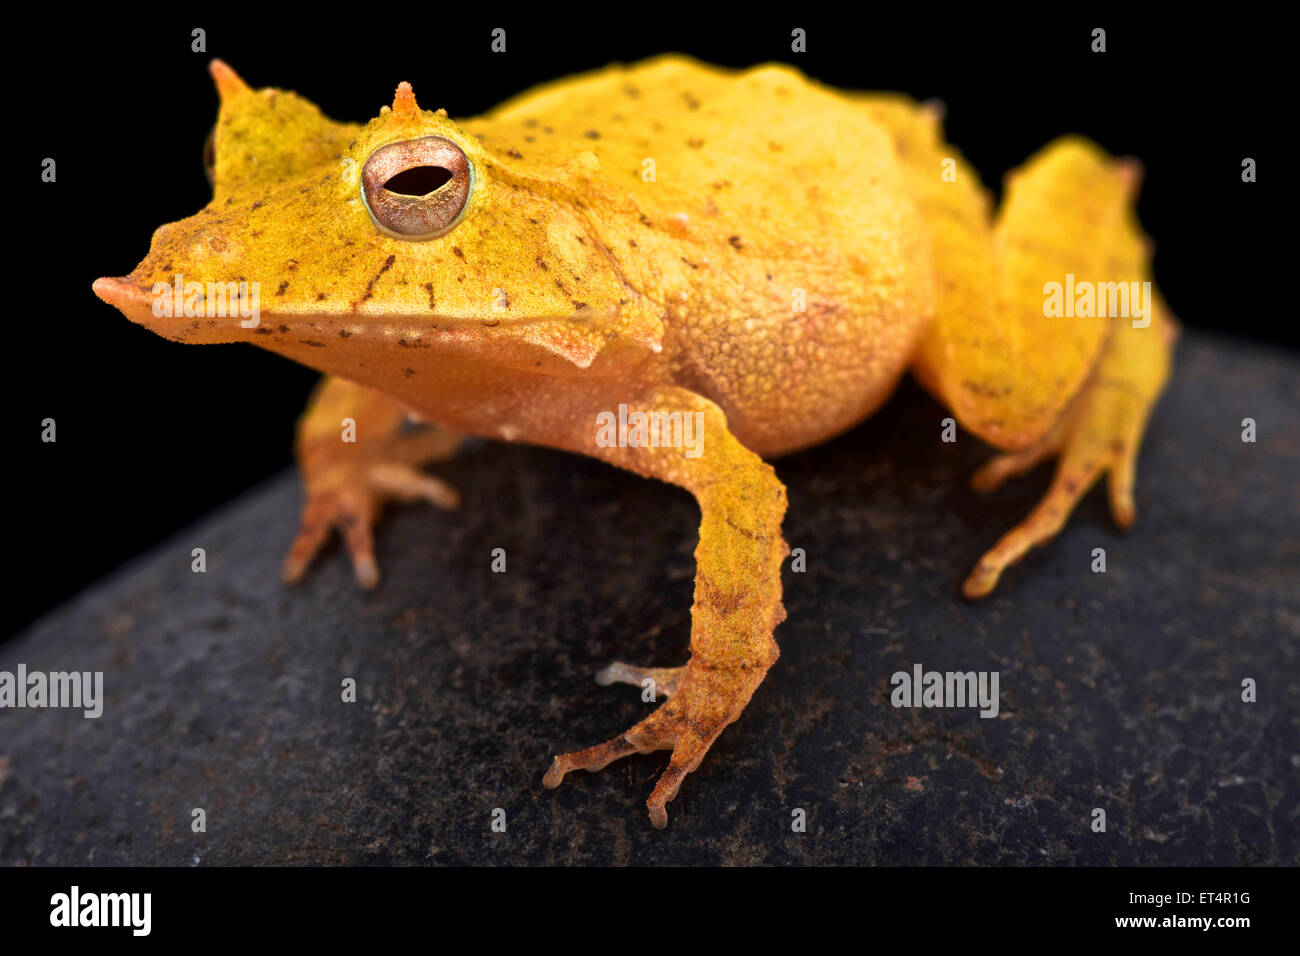 Solomon island leaf frog (Ceratobatrachus guentheri) Stock Photo